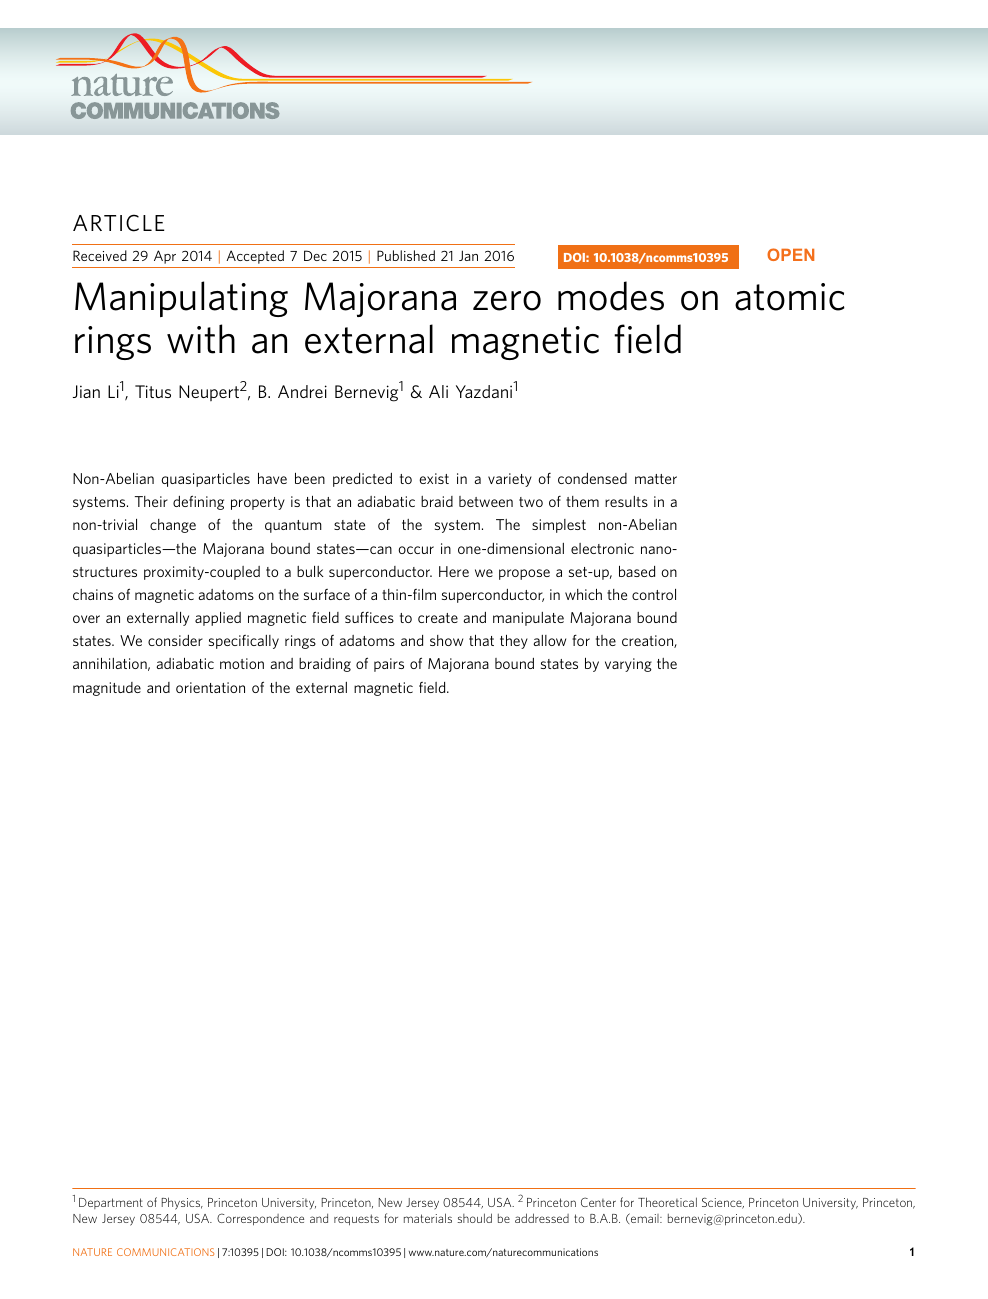 Manipulating Majorana Zero Modes On Atomic Rings With An External